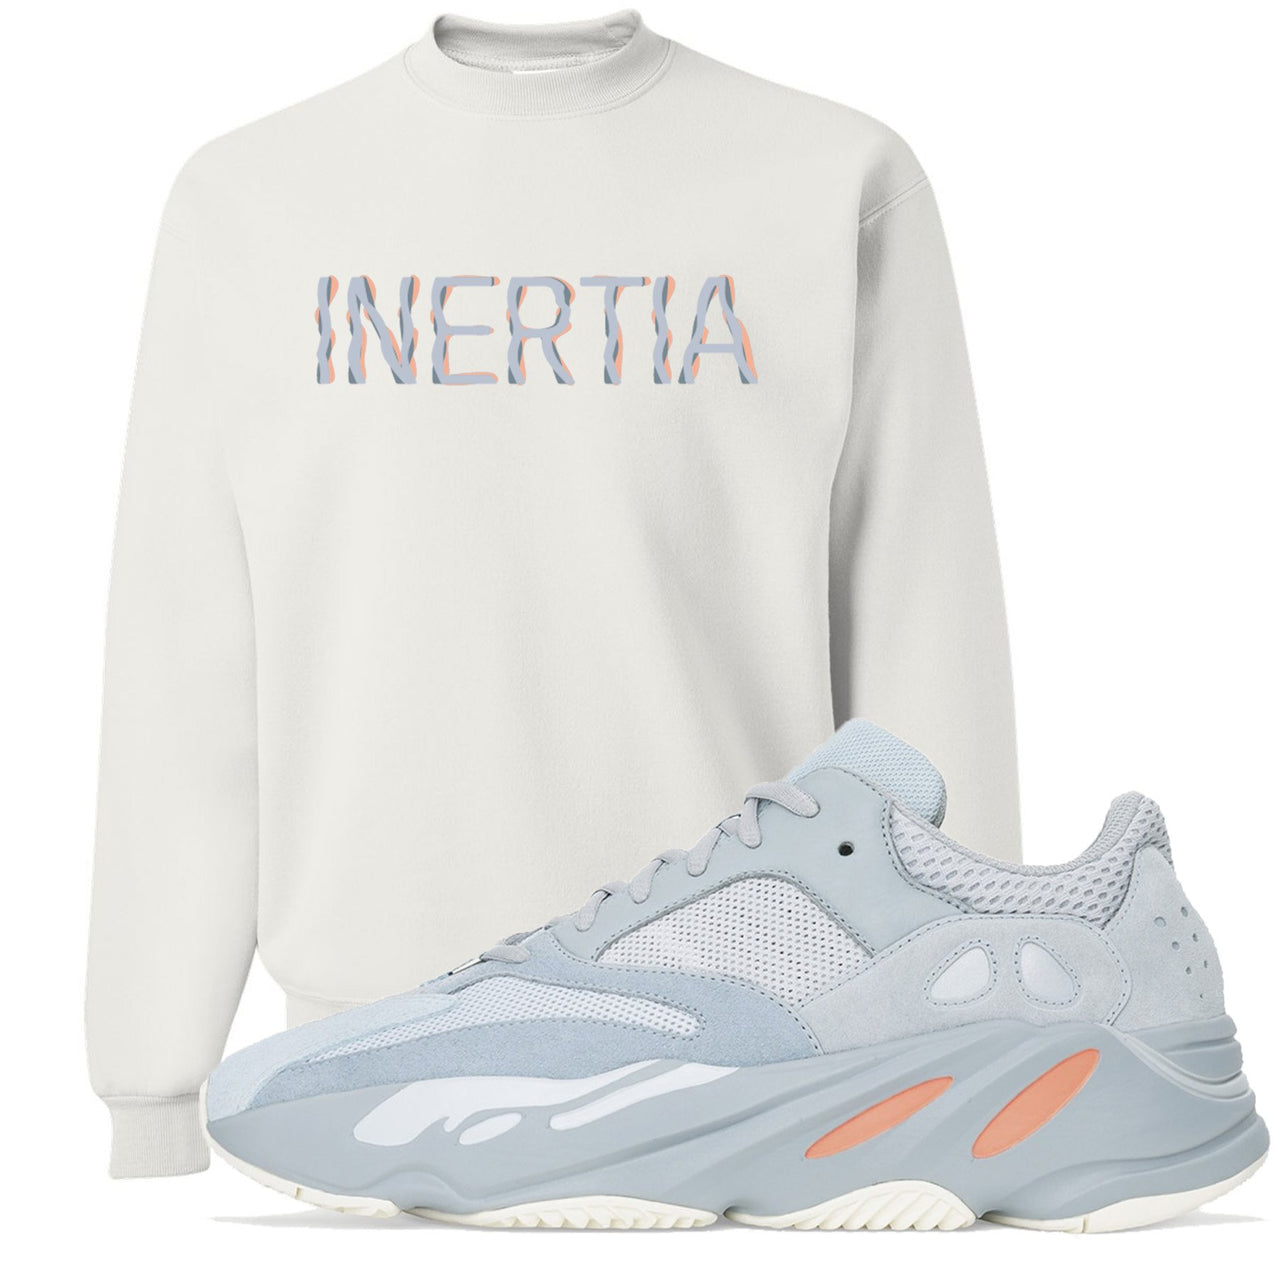 Inertia 700s Crewneck Sweater | Inertia, White